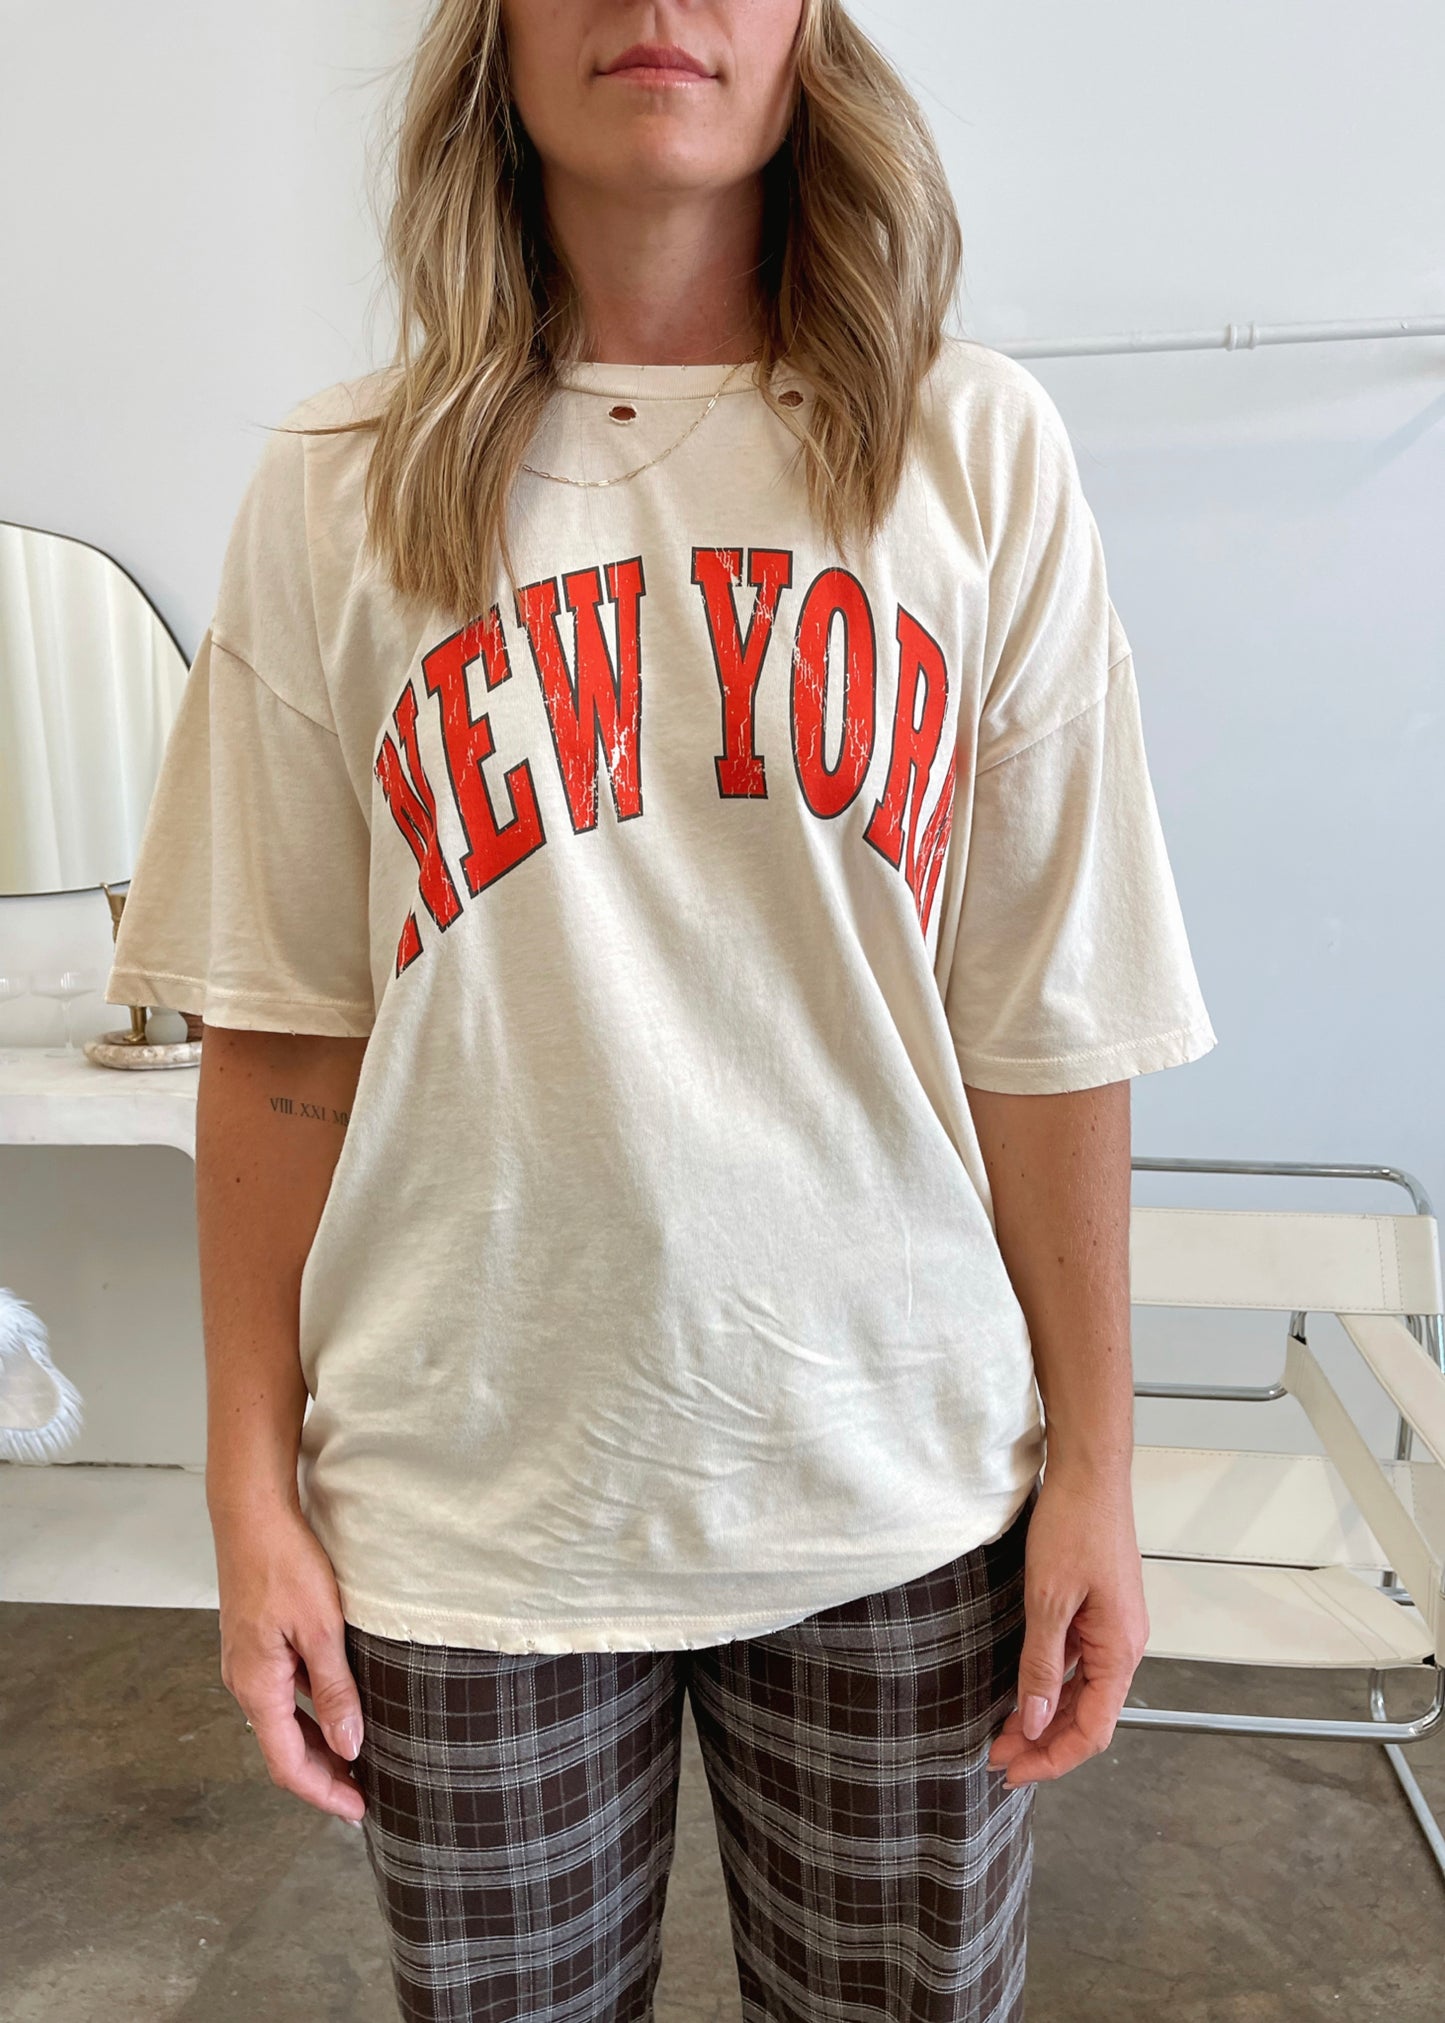 "New York" Graphic Tee